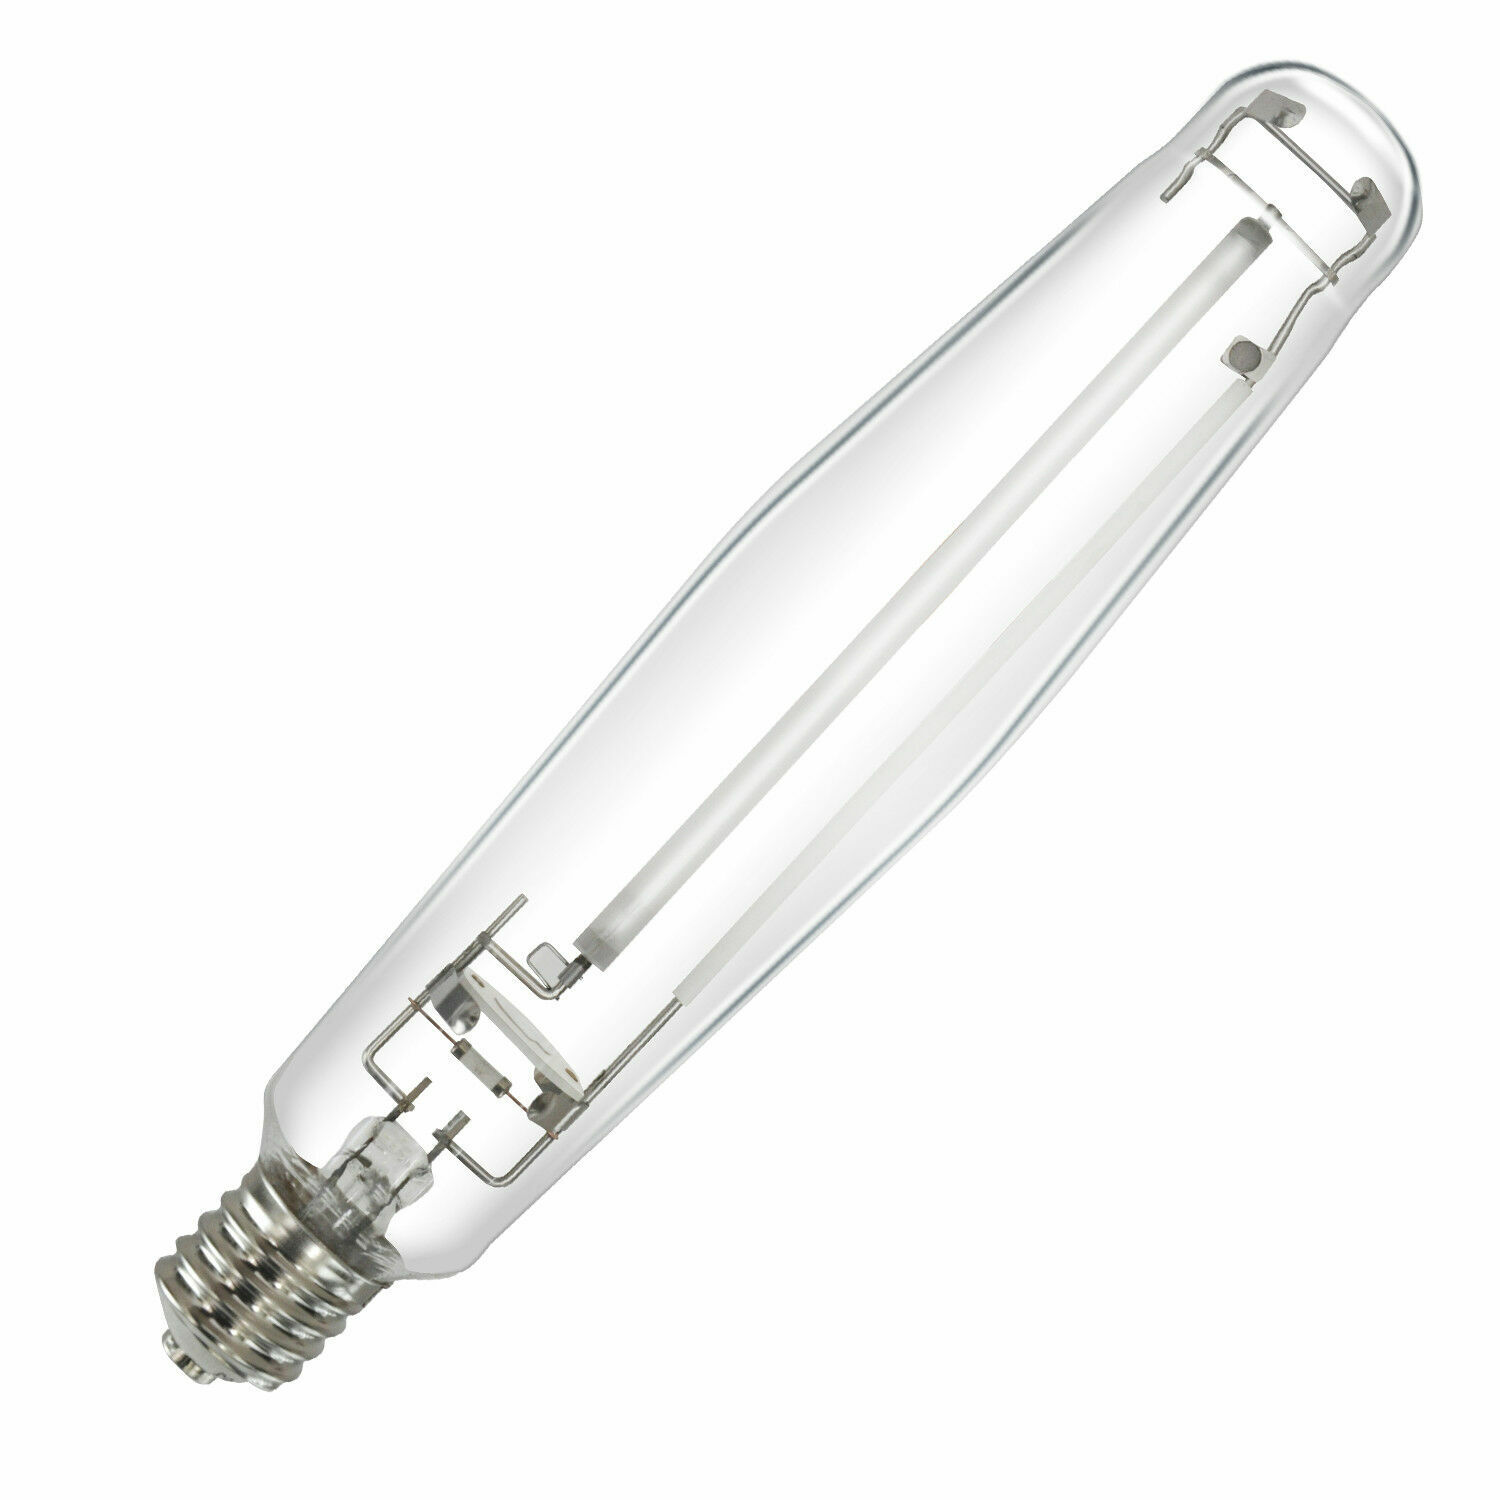 iPower 400-1000W HPS/MH Grow Light Bulb Lamp High Pressure Sodium Metal Halide